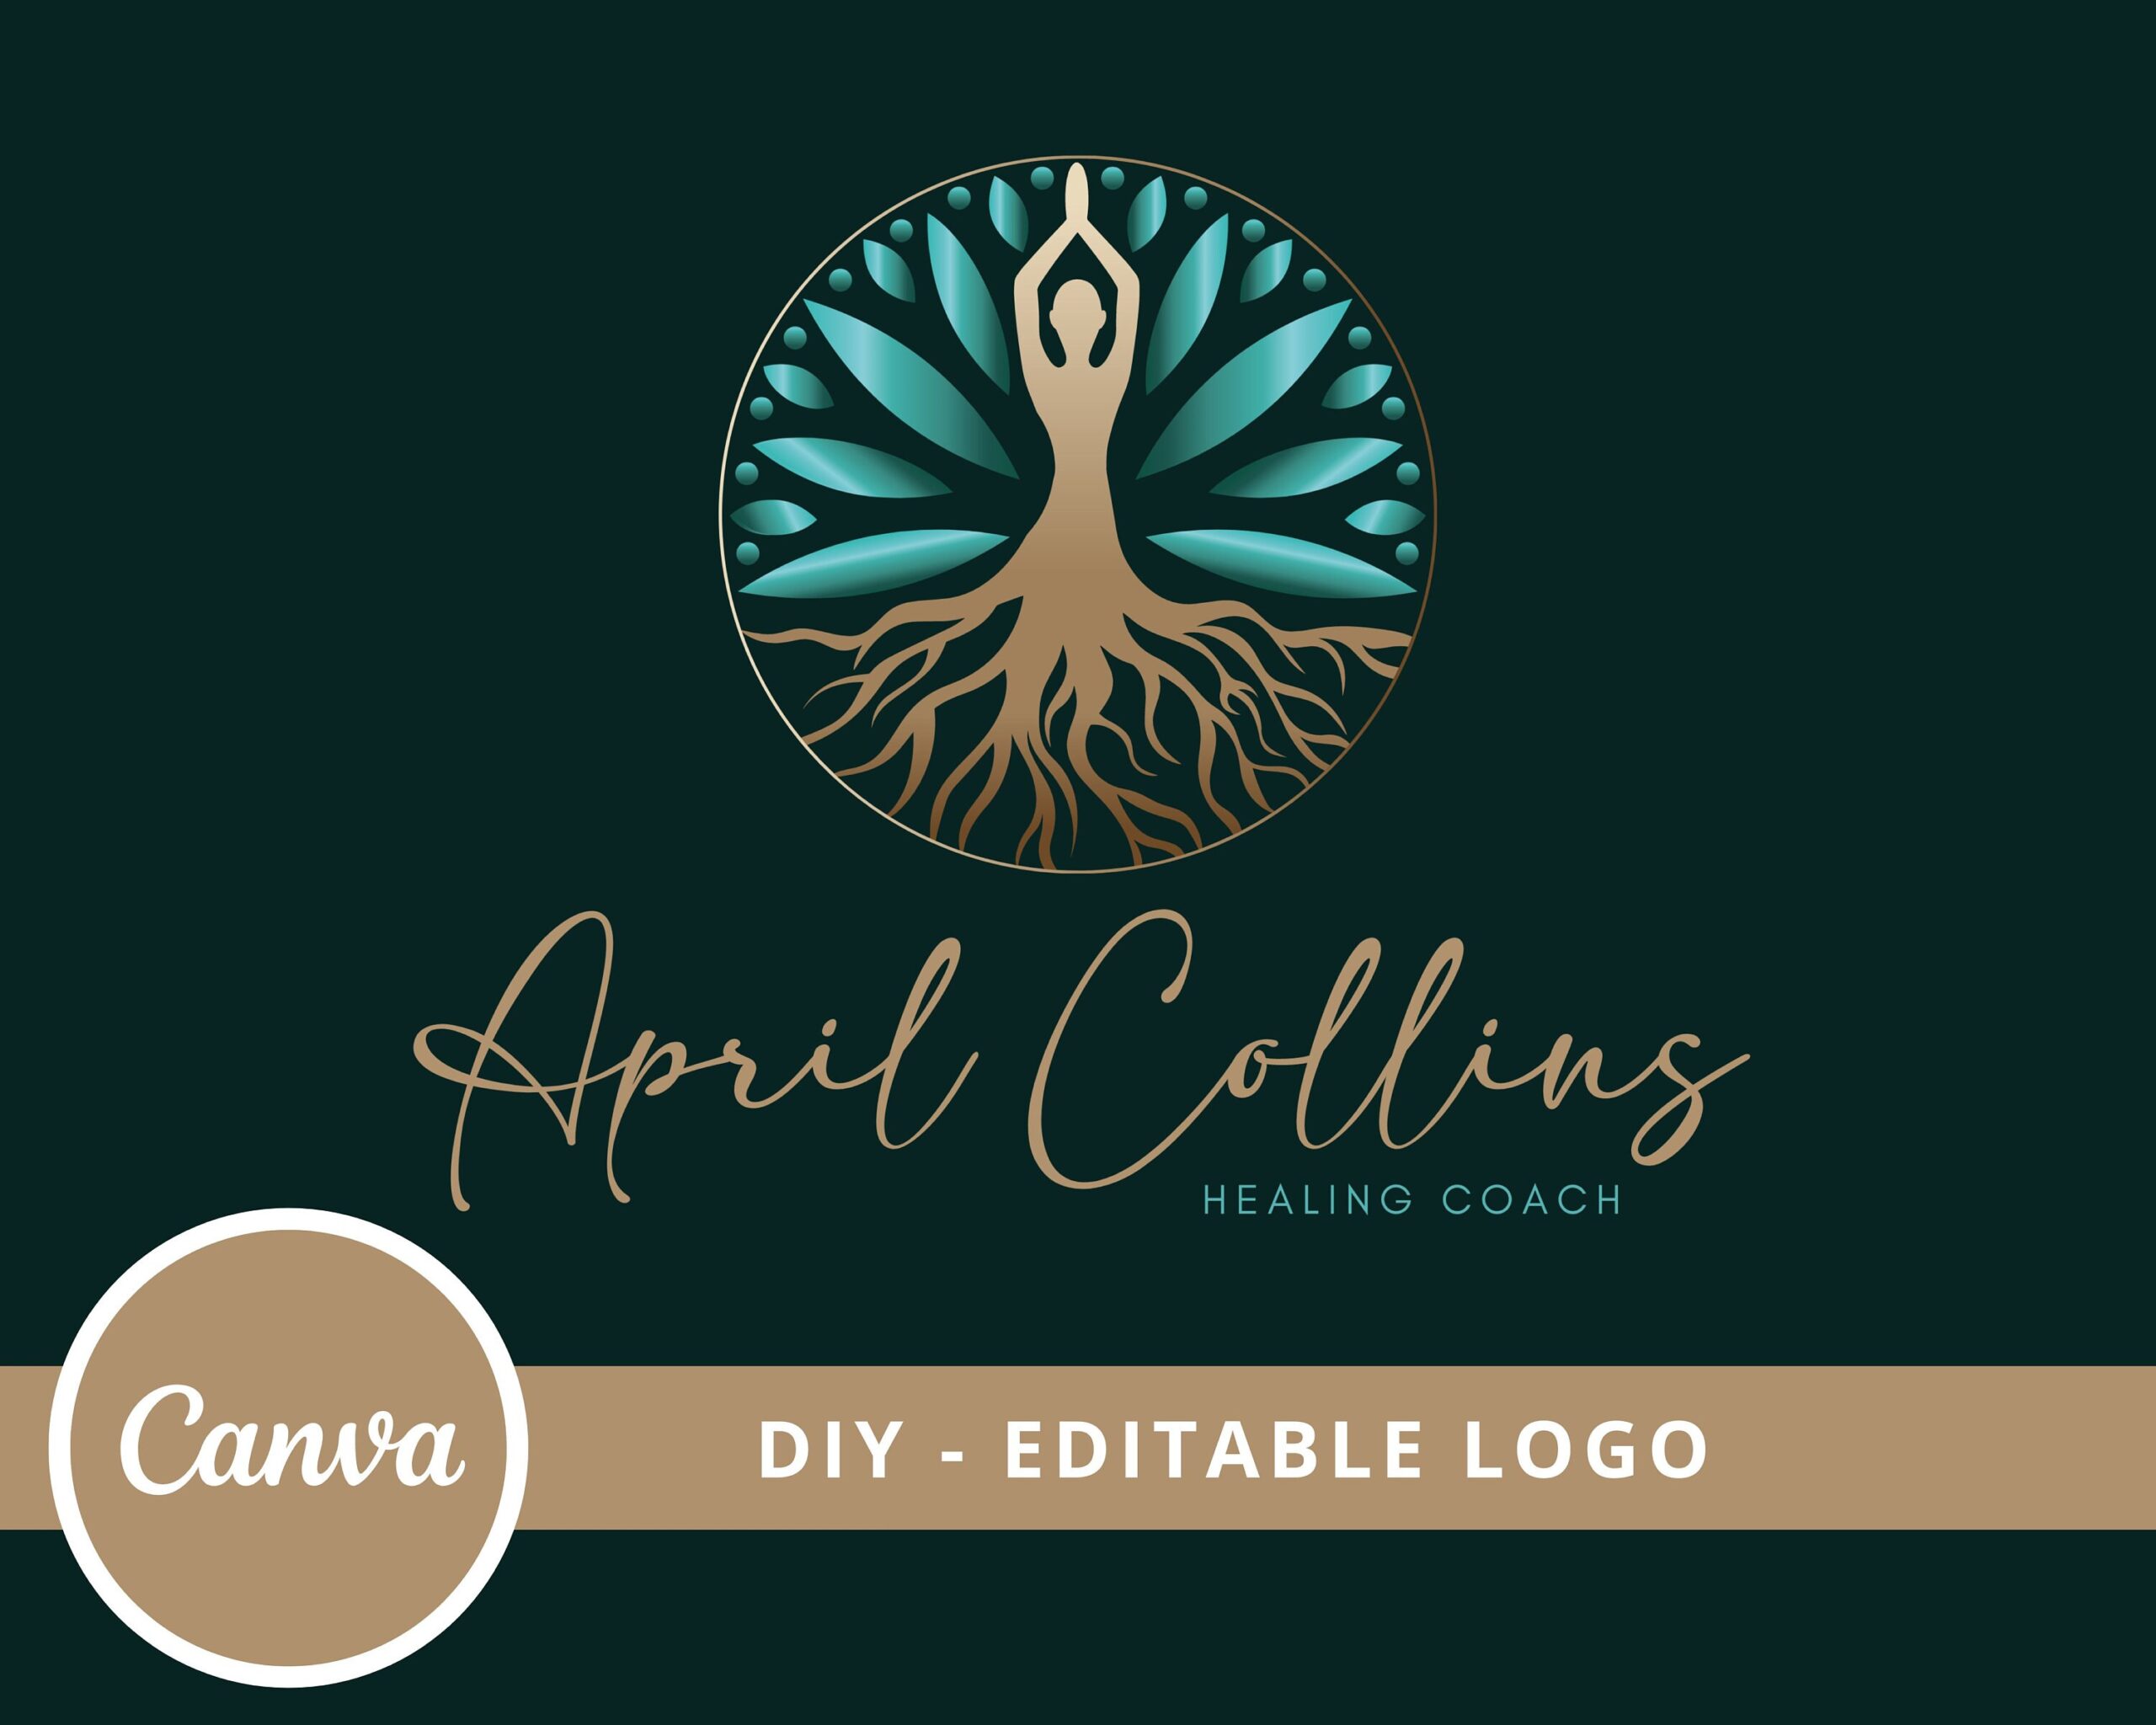 DIY Premade Logo Design, Healing Coach, Teal Green Mandala Logo, Wellness Life Coaching Logo, Canva Logo, Editable Template - Instant Access